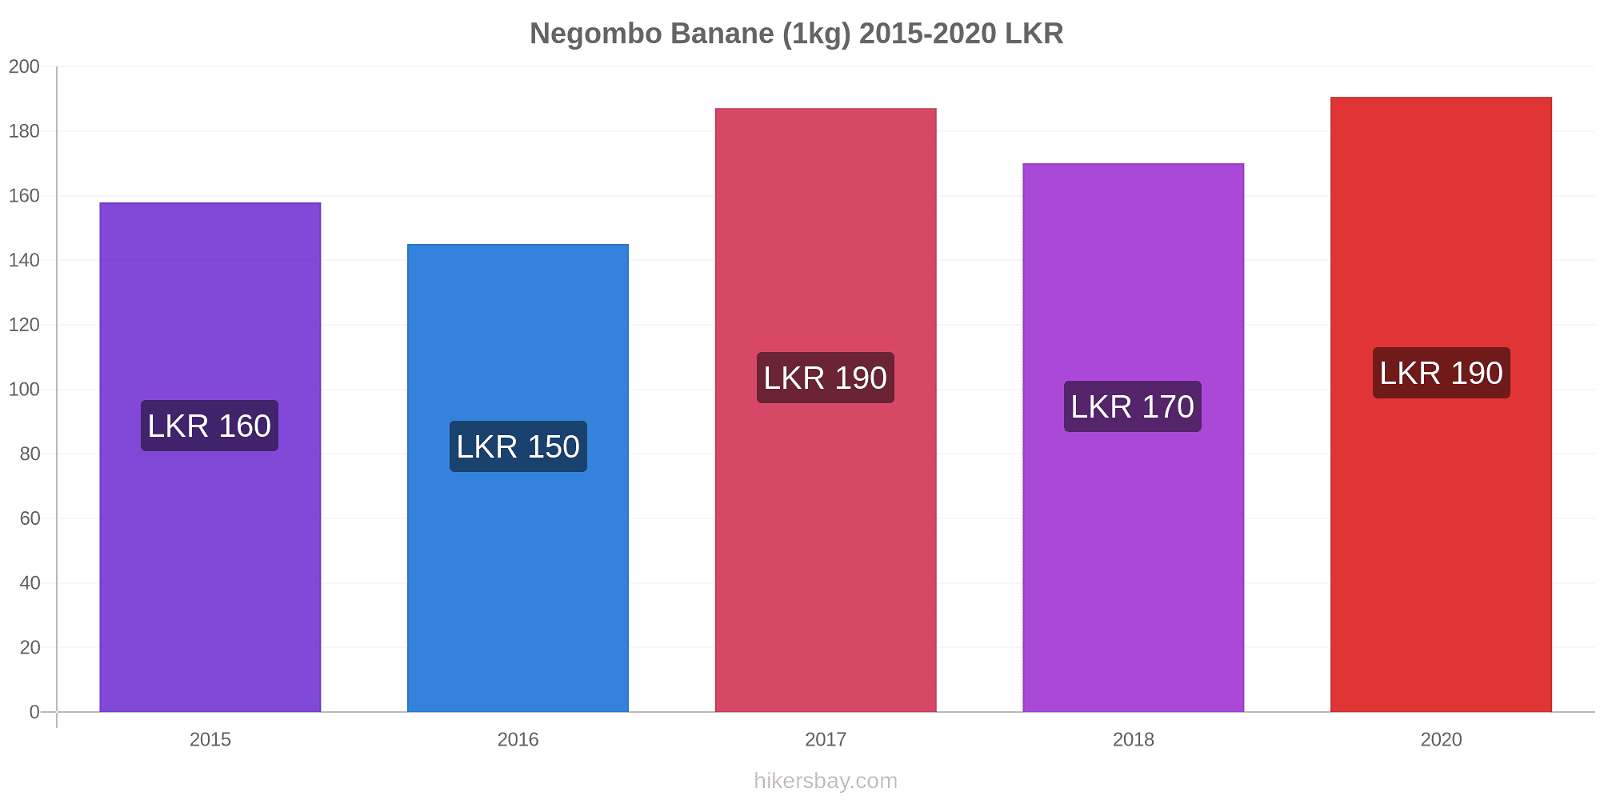 Negombo variazioni di prezzo Banana (1kg) hikersbay.com